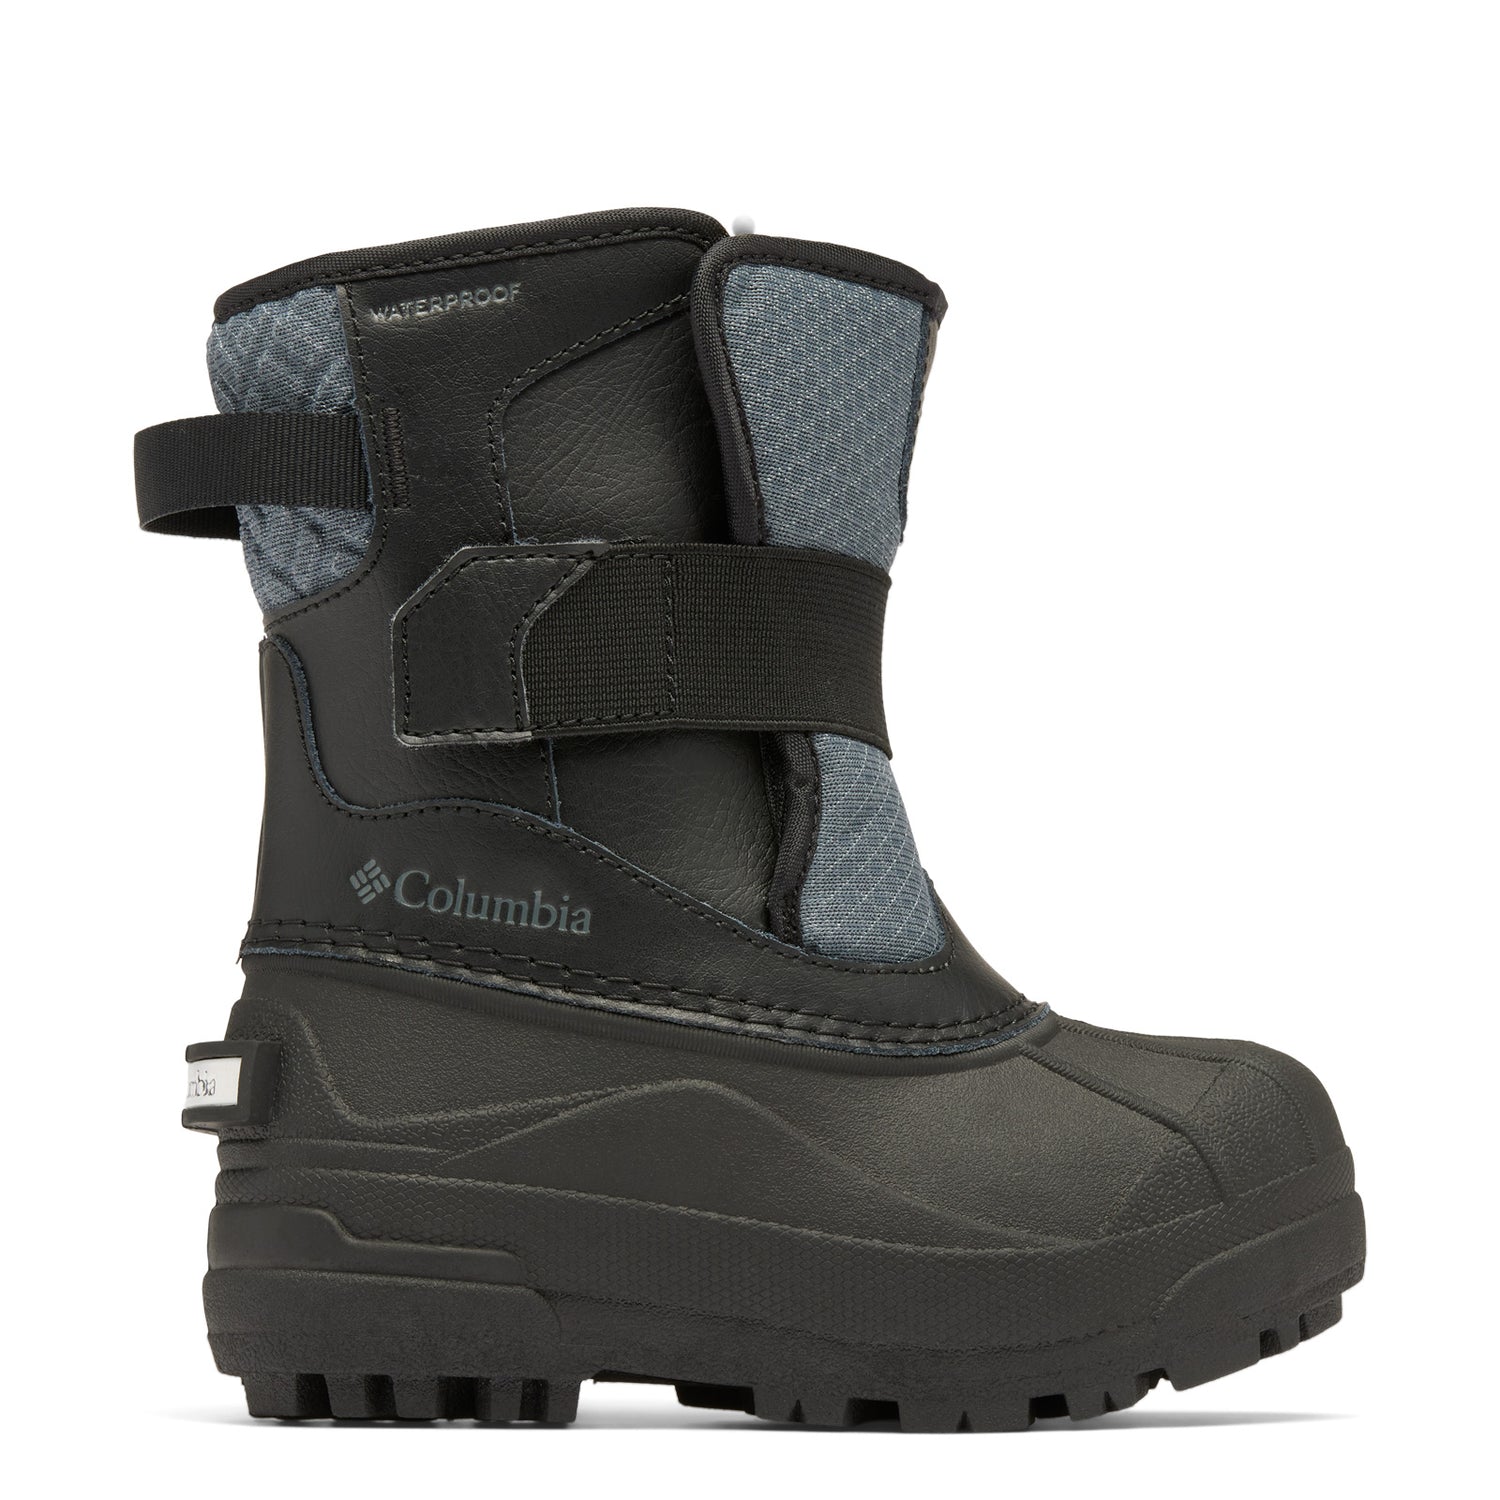 Peltz Shoes  Kid's Columbia Bugaboot Snow Boot – Toddler & Little Kid BLACK GREY 2020152-010